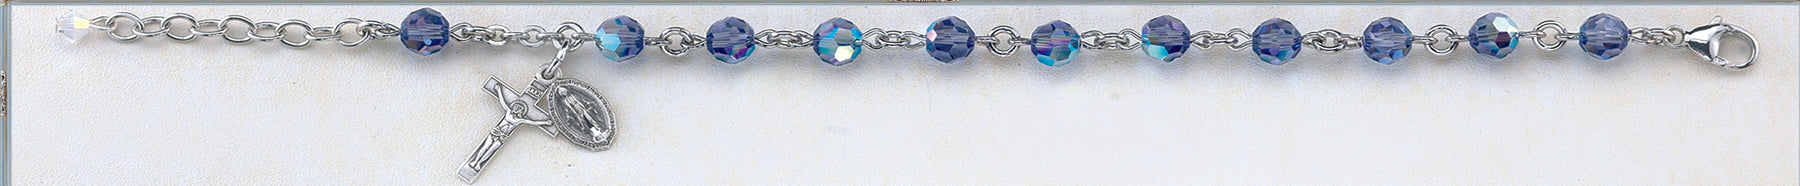 Zircon Round Faceted Swarovski Crystal Sterling Bracelet